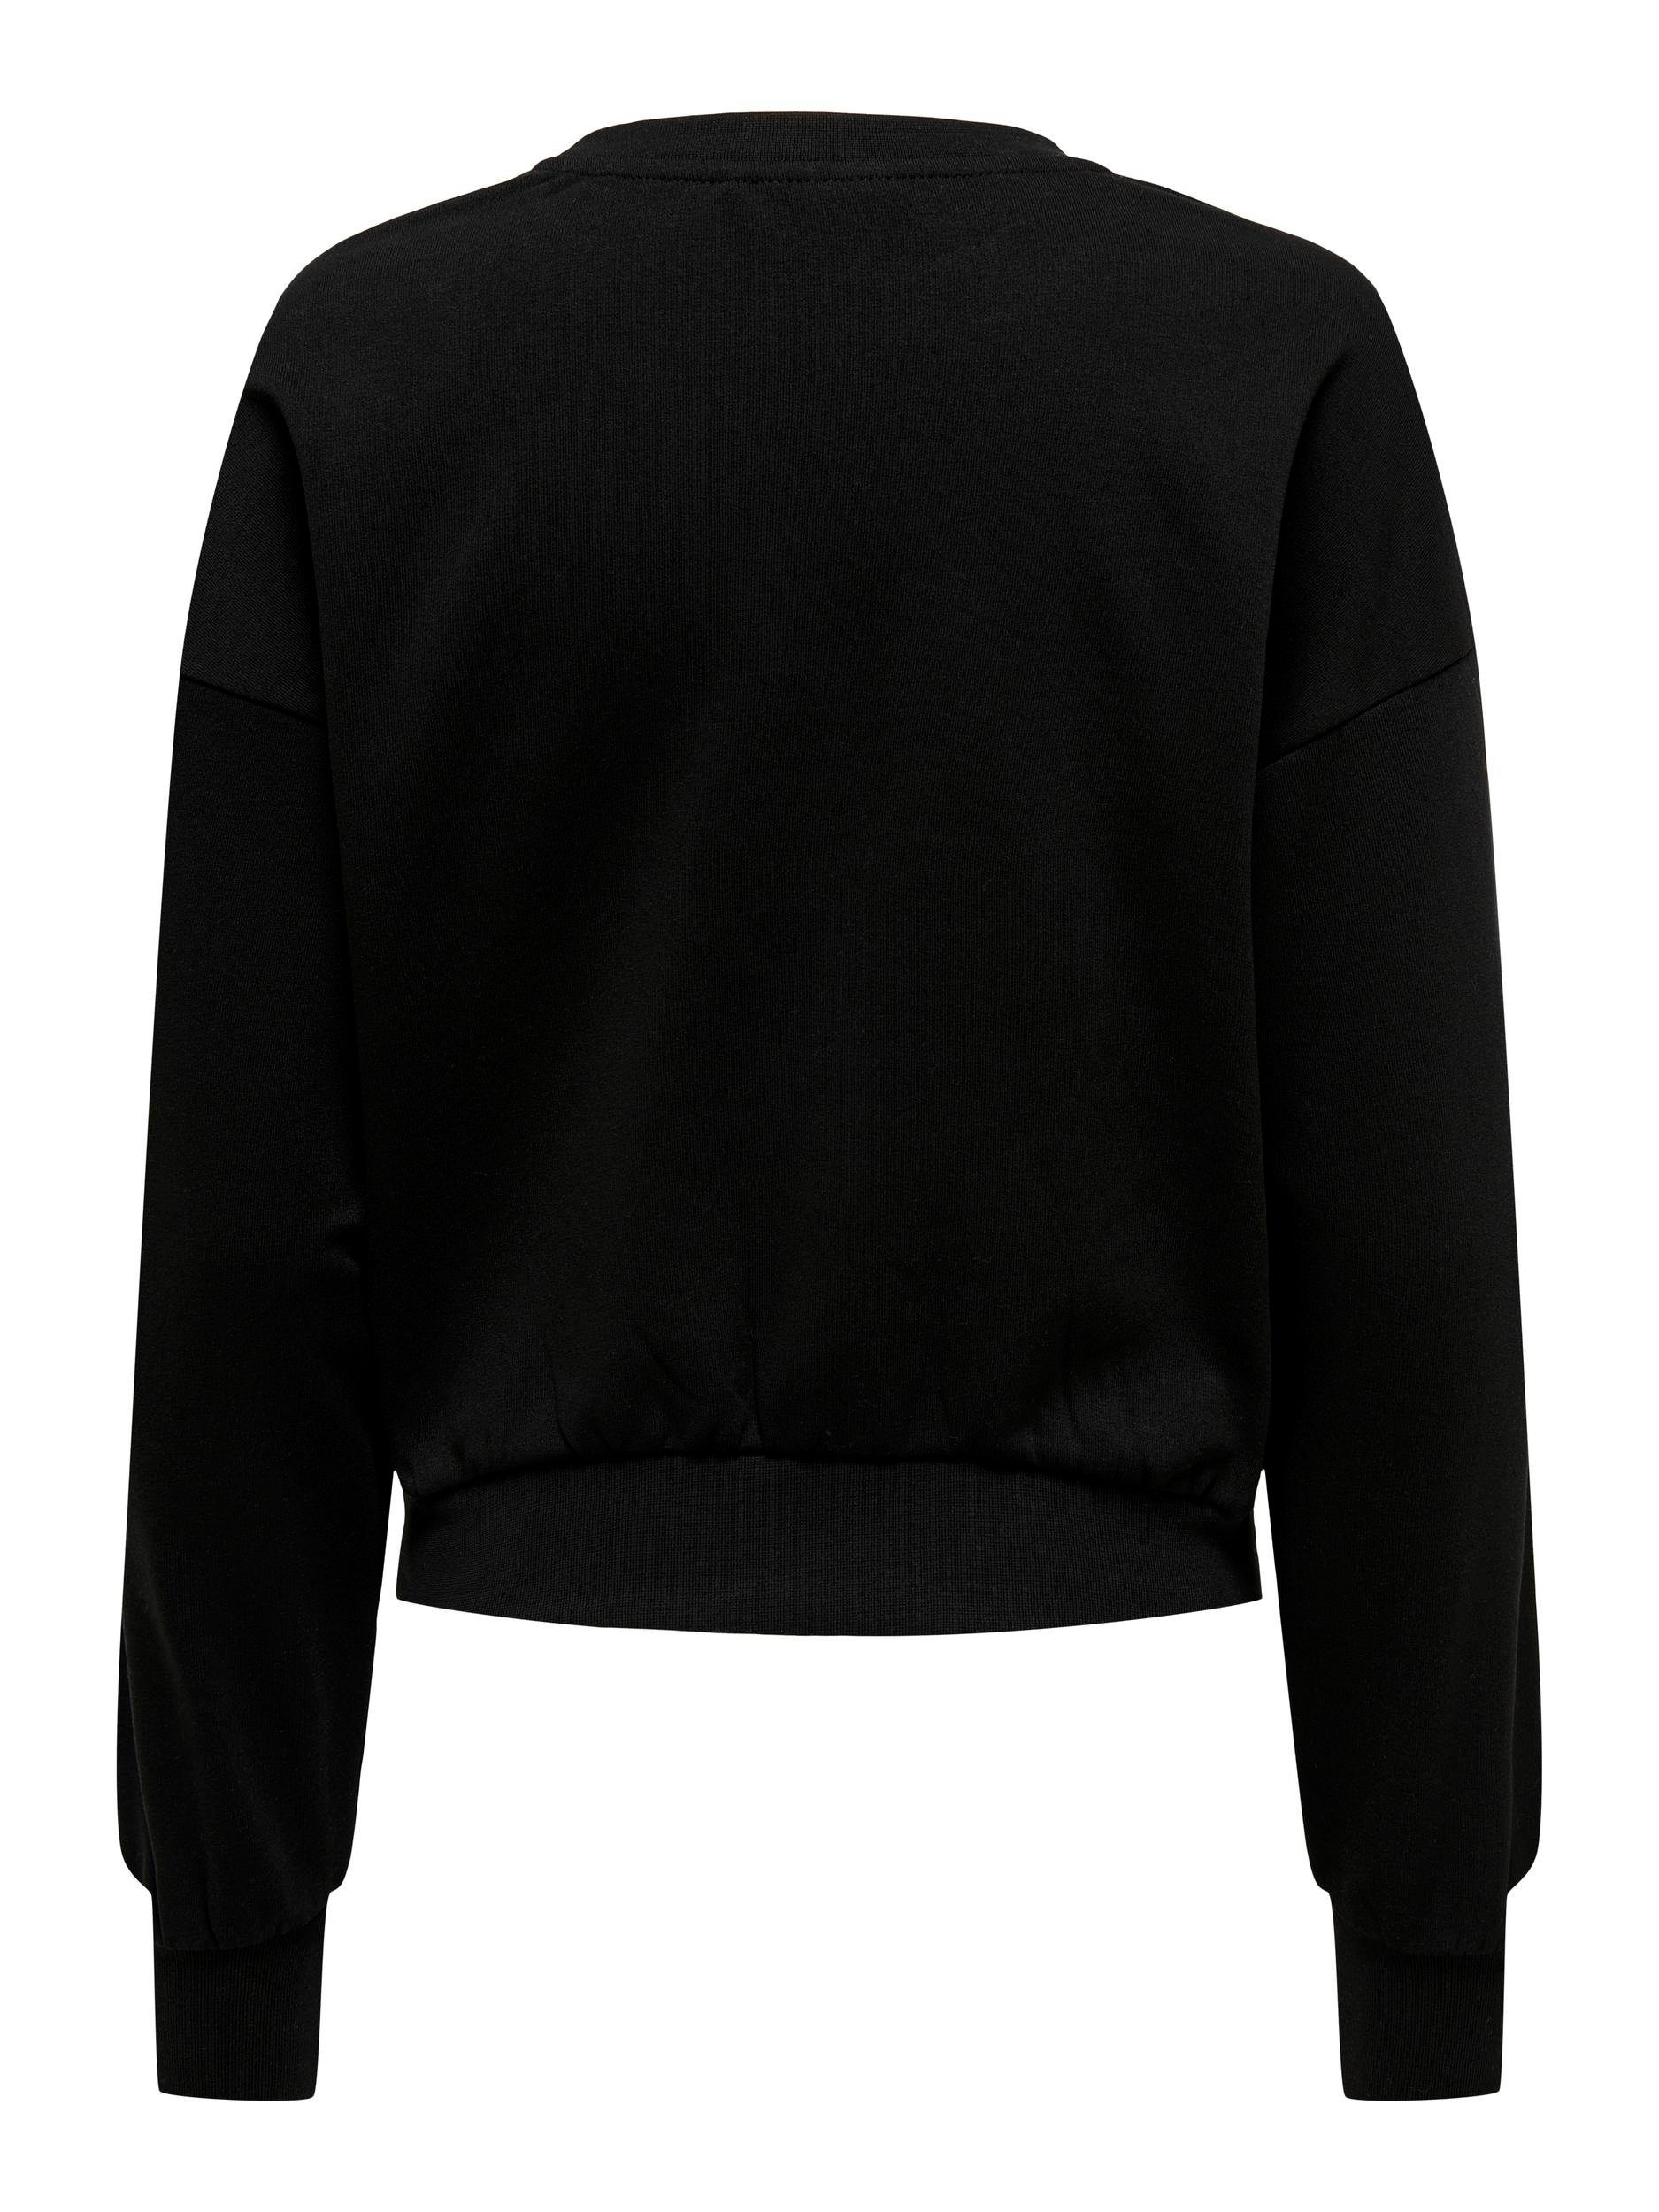 Black O-NECK LIPSTICK ONLKINJA Sweater L/S SWT Print:Lips BOX ONLY